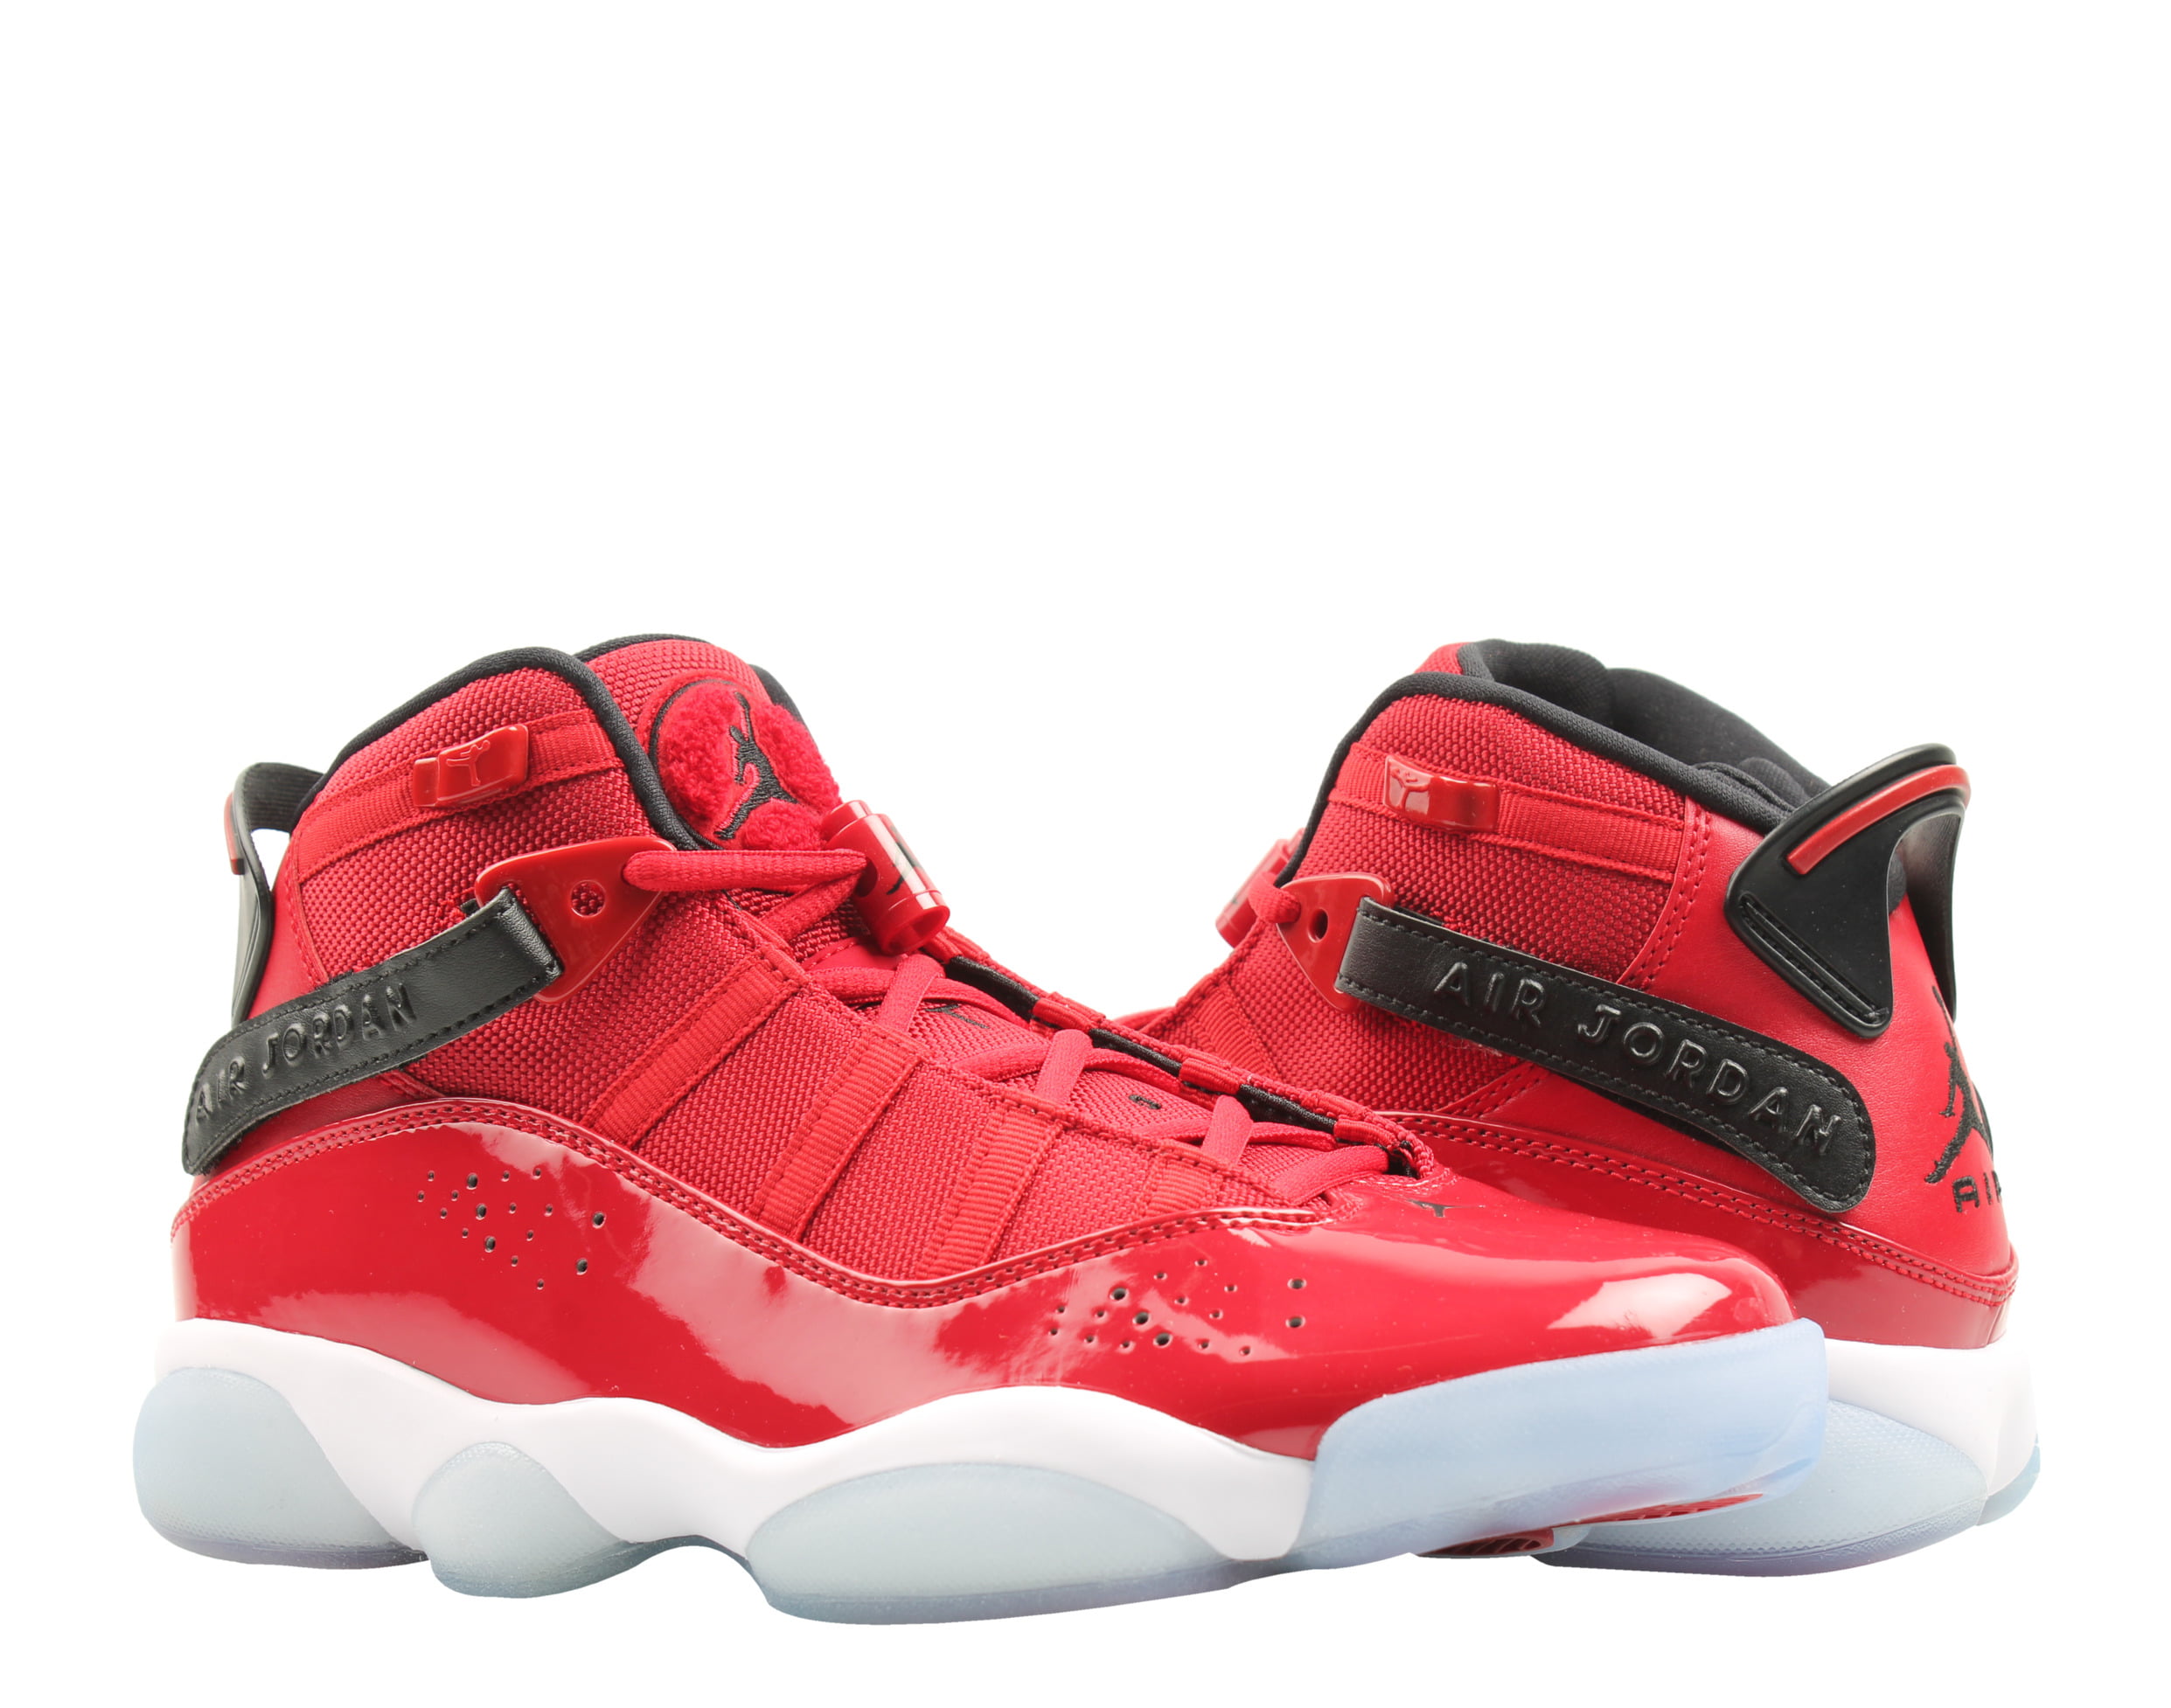 Jordan - Nike Air Jordan 6 Rings Gym Red/Black-White Men's ...